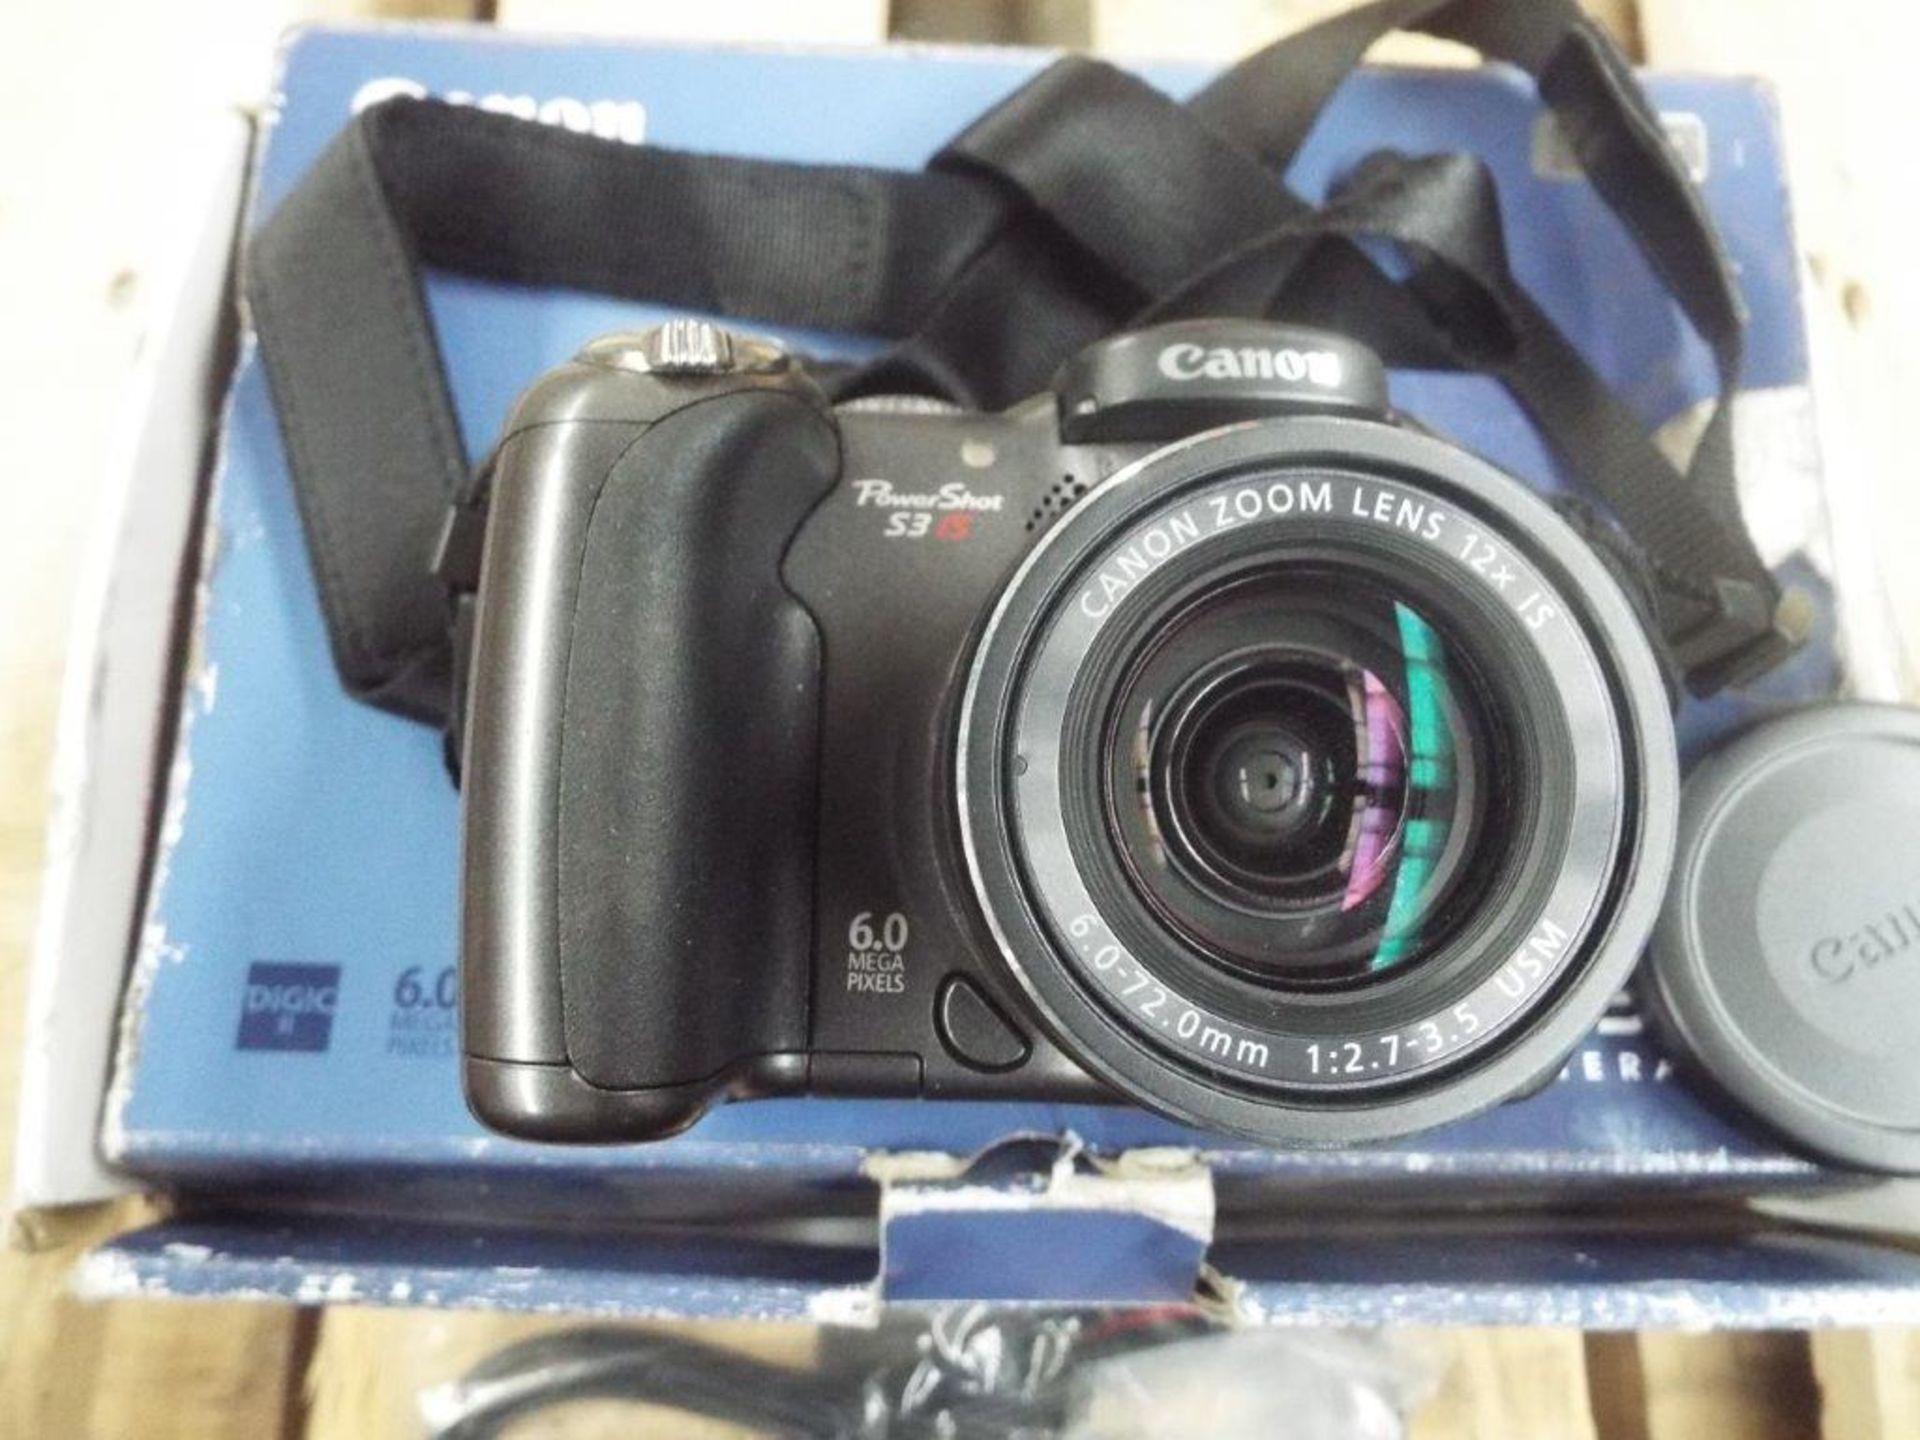 Canon Powershot S3 IS 6.0MP Digital Camera - Image 4 of 8